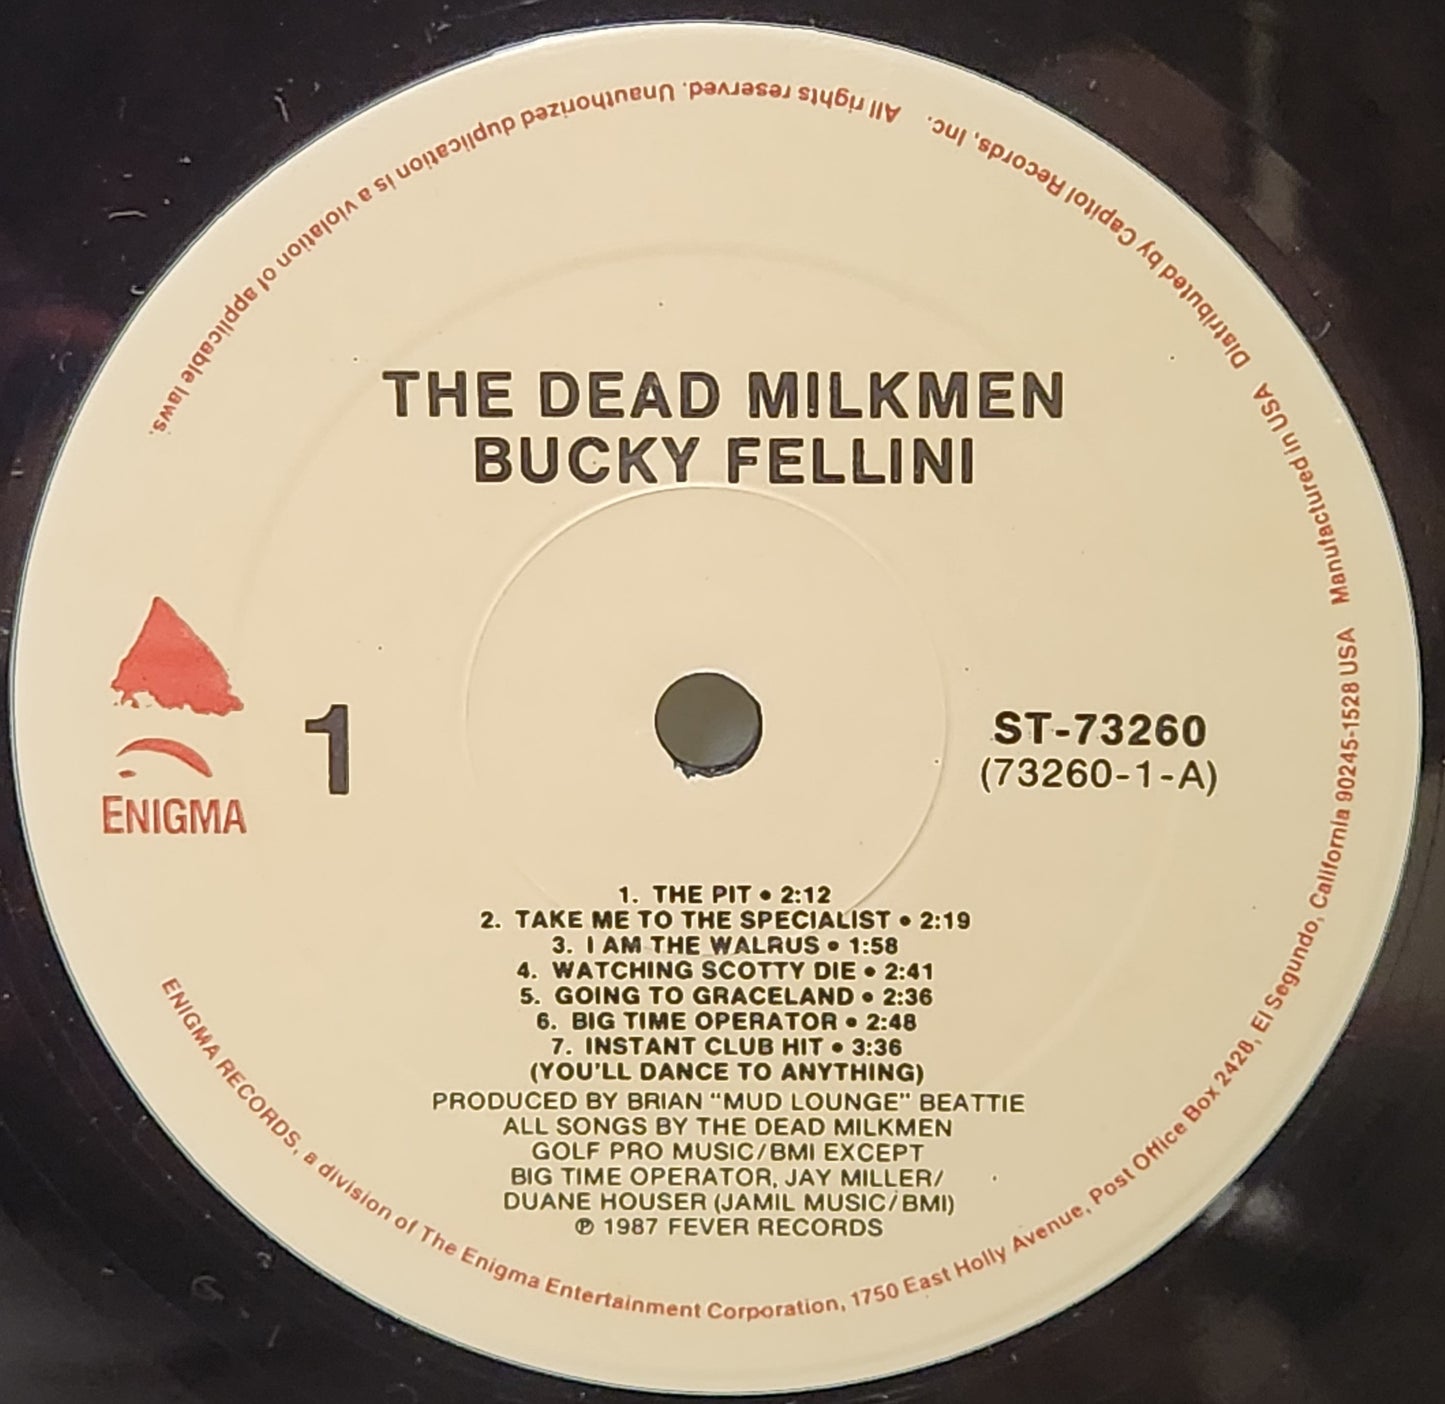 The Dead Milkmen "Bucky Fellini" 1987 Indie Rock Record Album